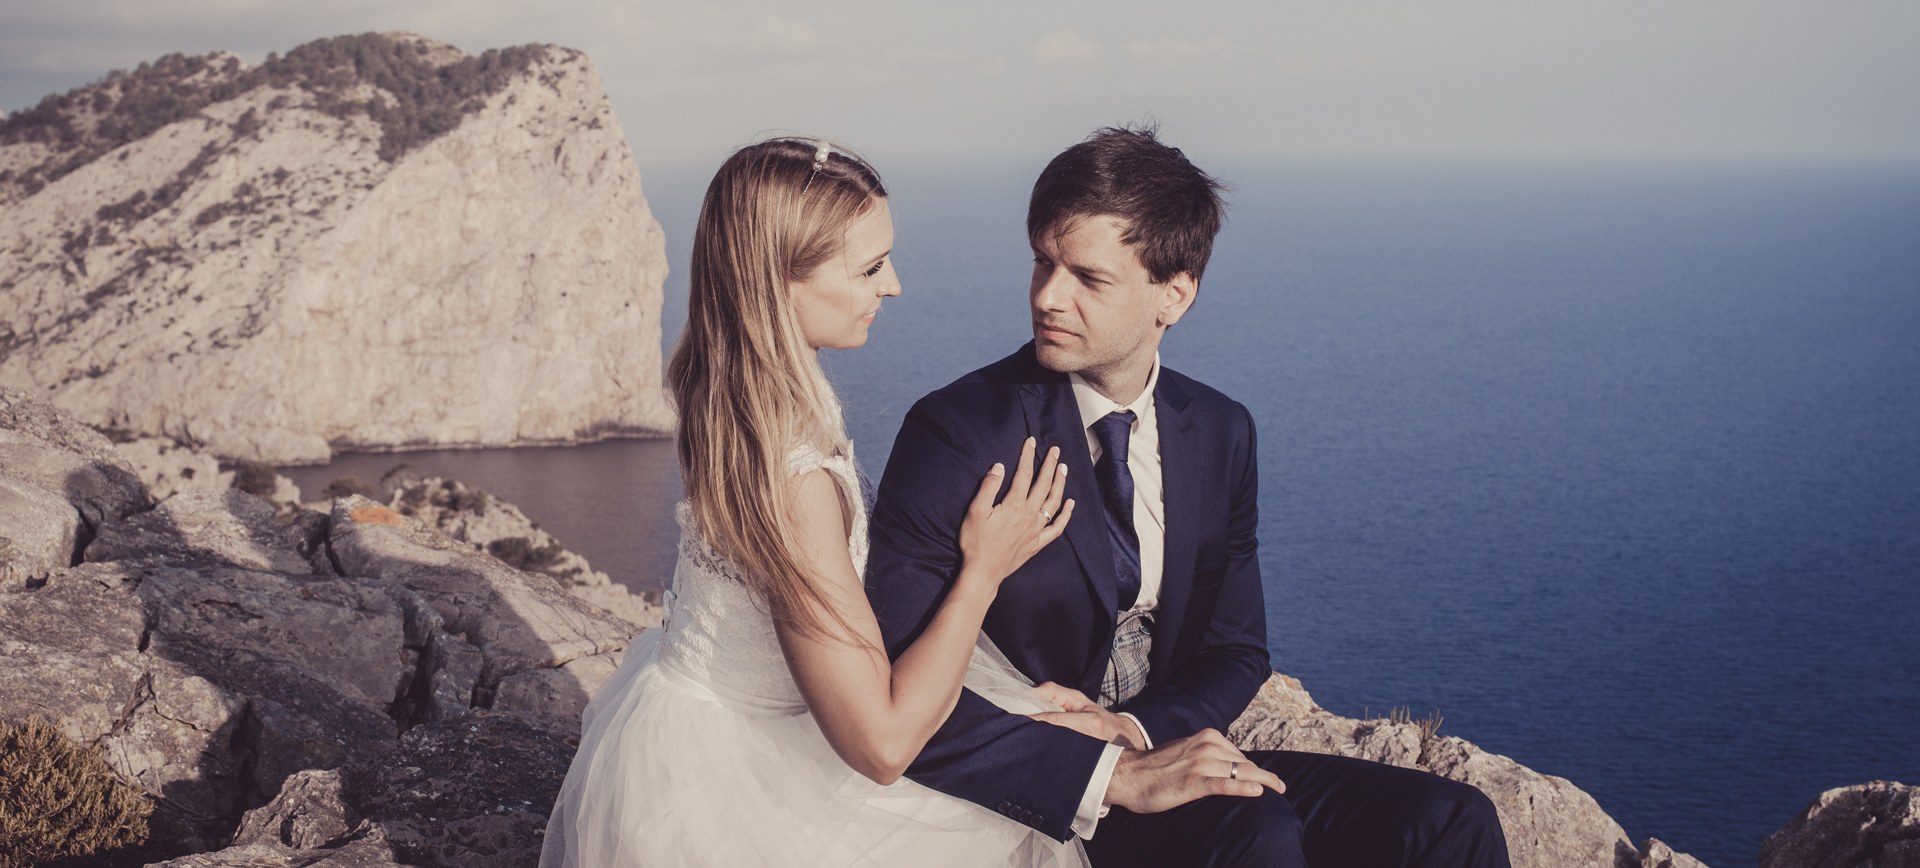 Mallorca beach elopement in formentor pollensa - bride and groom overlooking the ocean